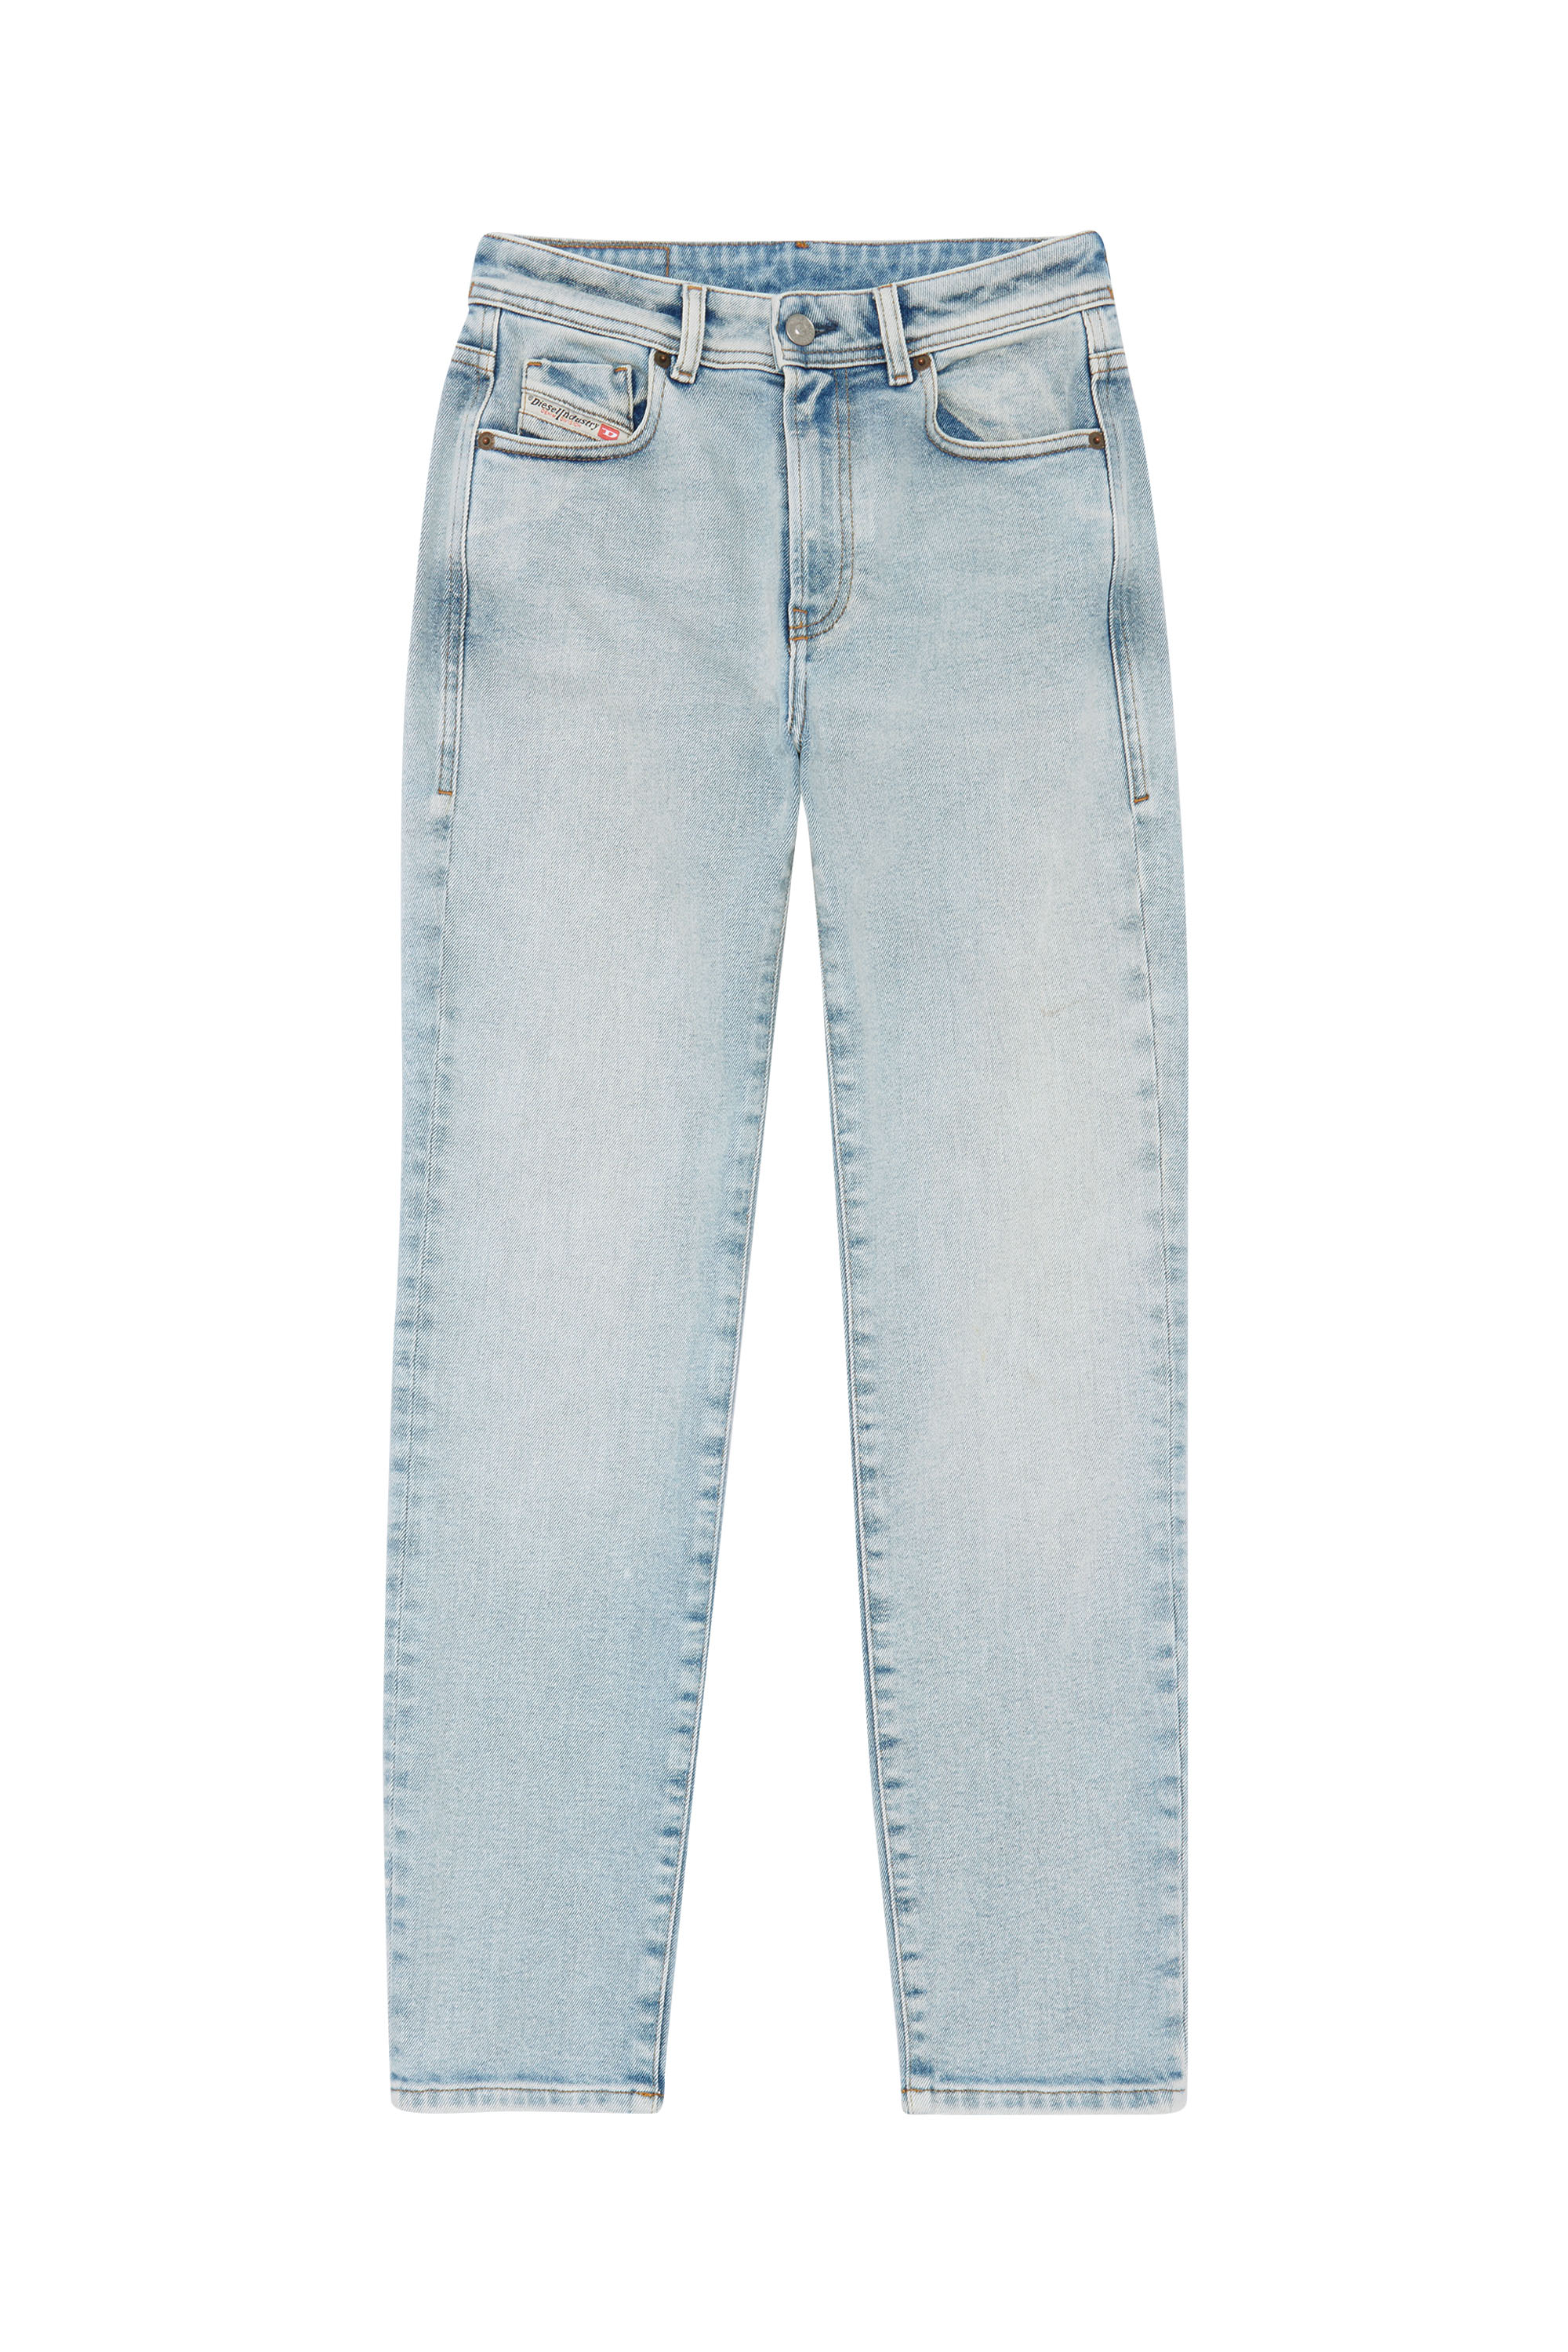 Women's Tapered Jeans: 2004 | Diesel